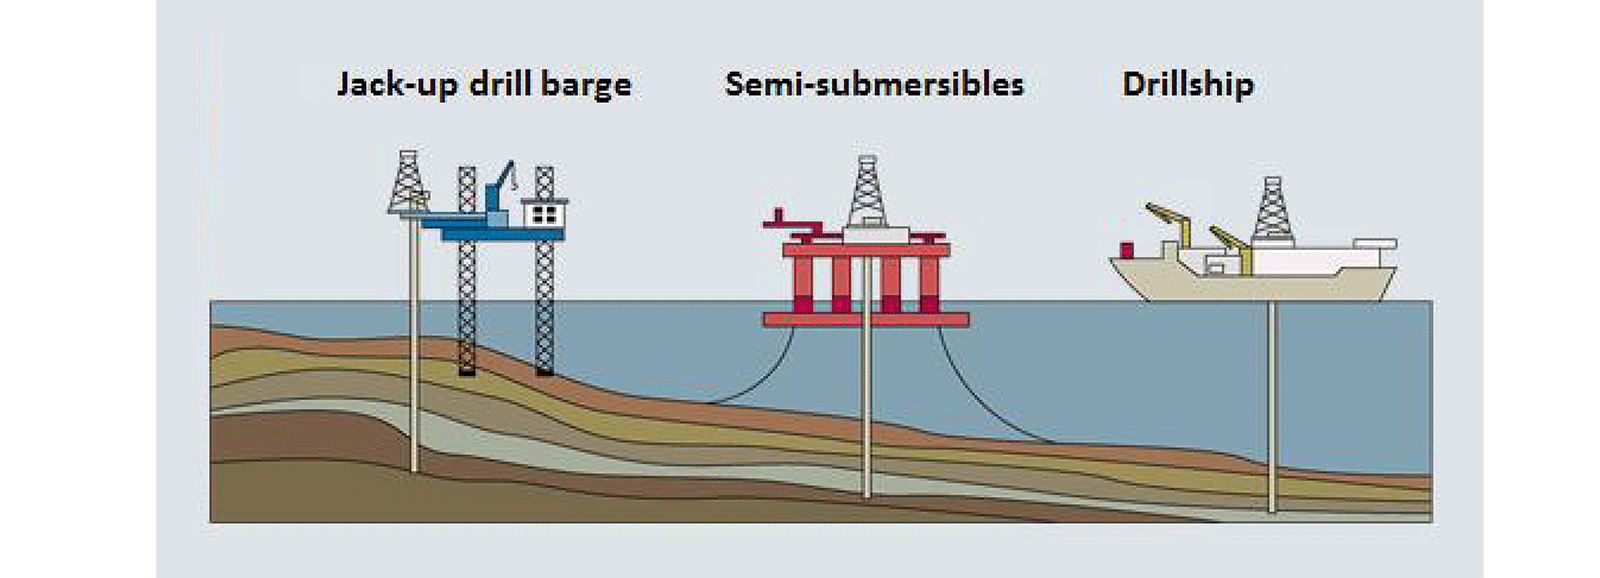 Campo petrolifero marino